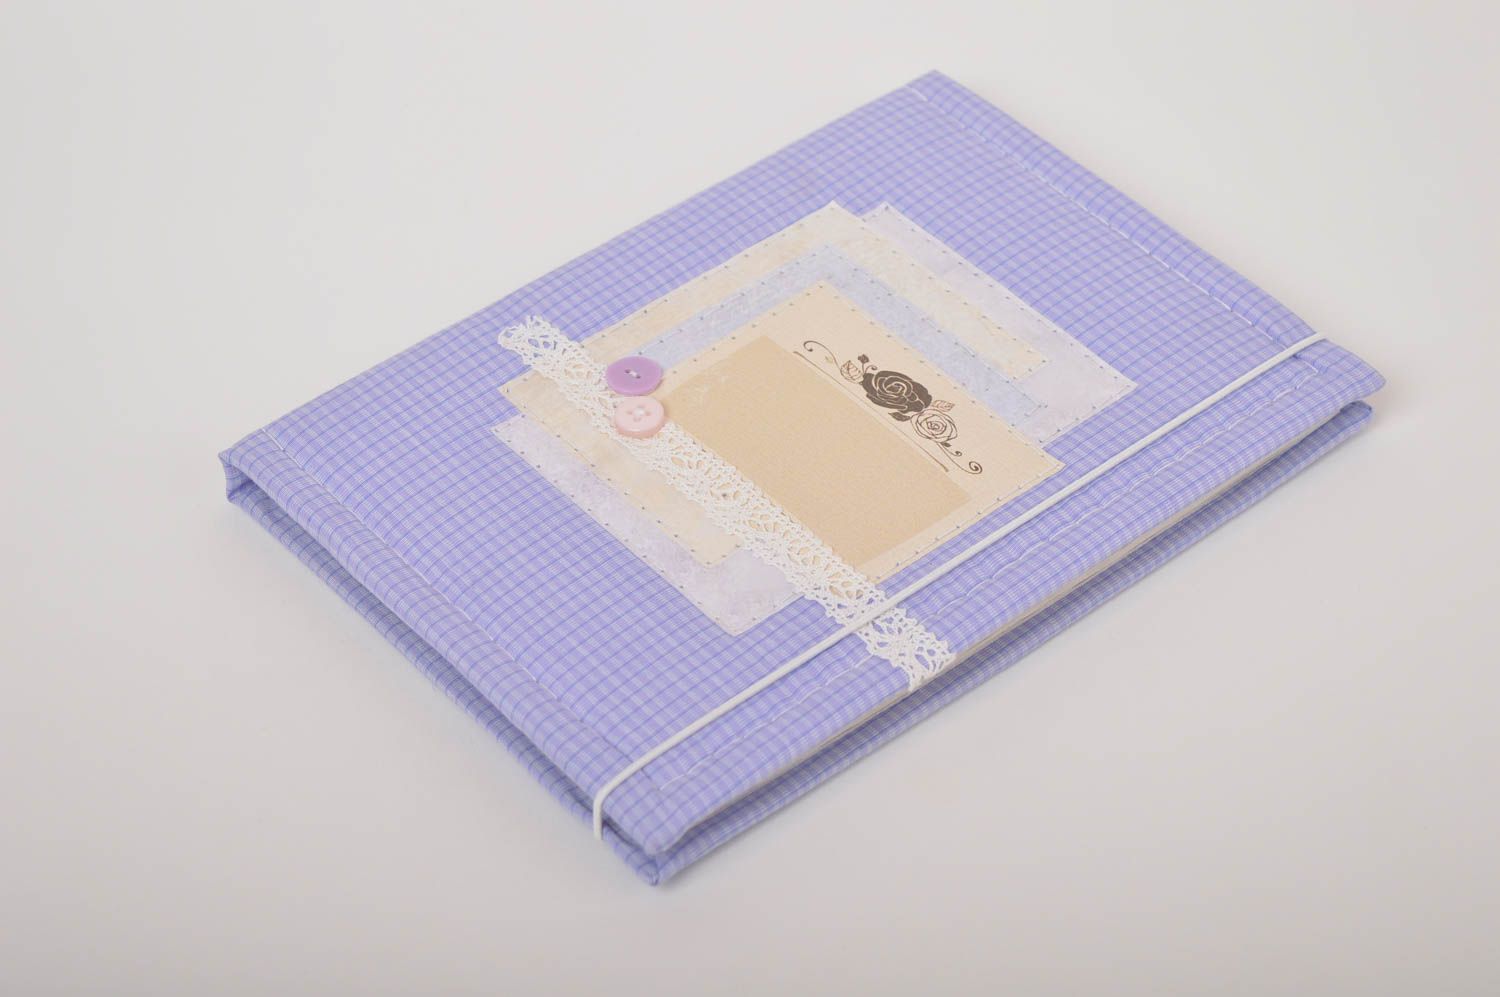 Carnet de notes Agenda fait main violet Cadeau femme design original stylé photo 2